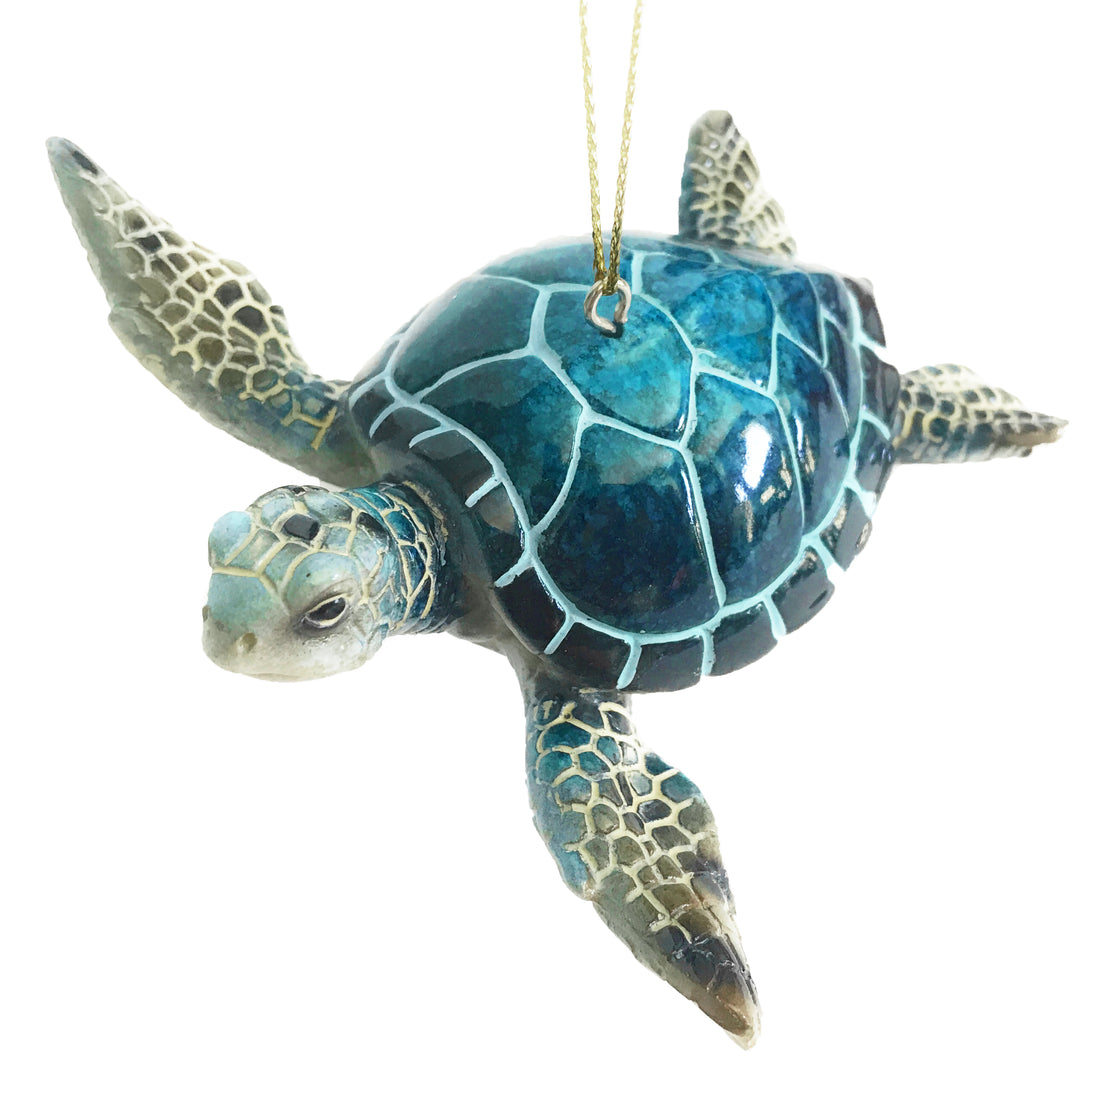 Christmas ornament - blue sea turtle, ceramic, hand-painted ornaments